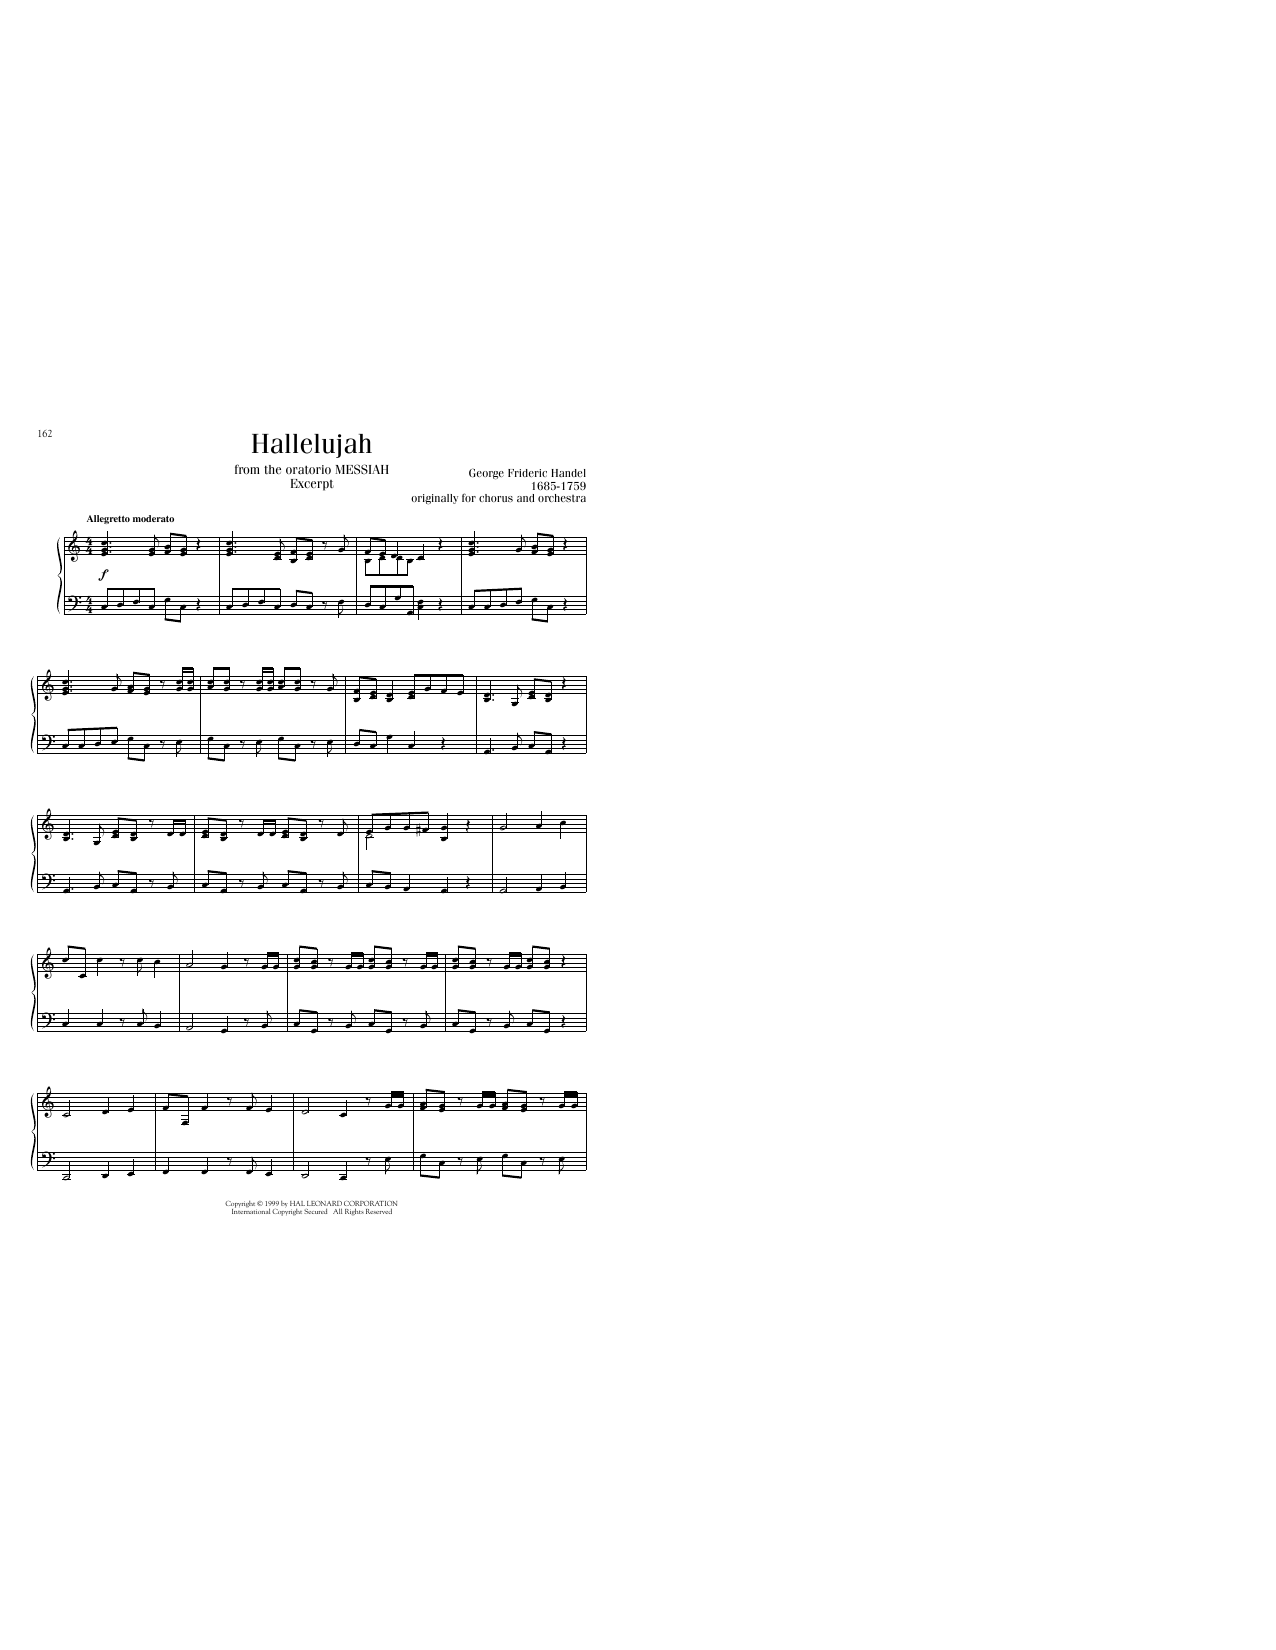 George Frideric Handel Hallelujah Chorus sheet music notes printable PDF score